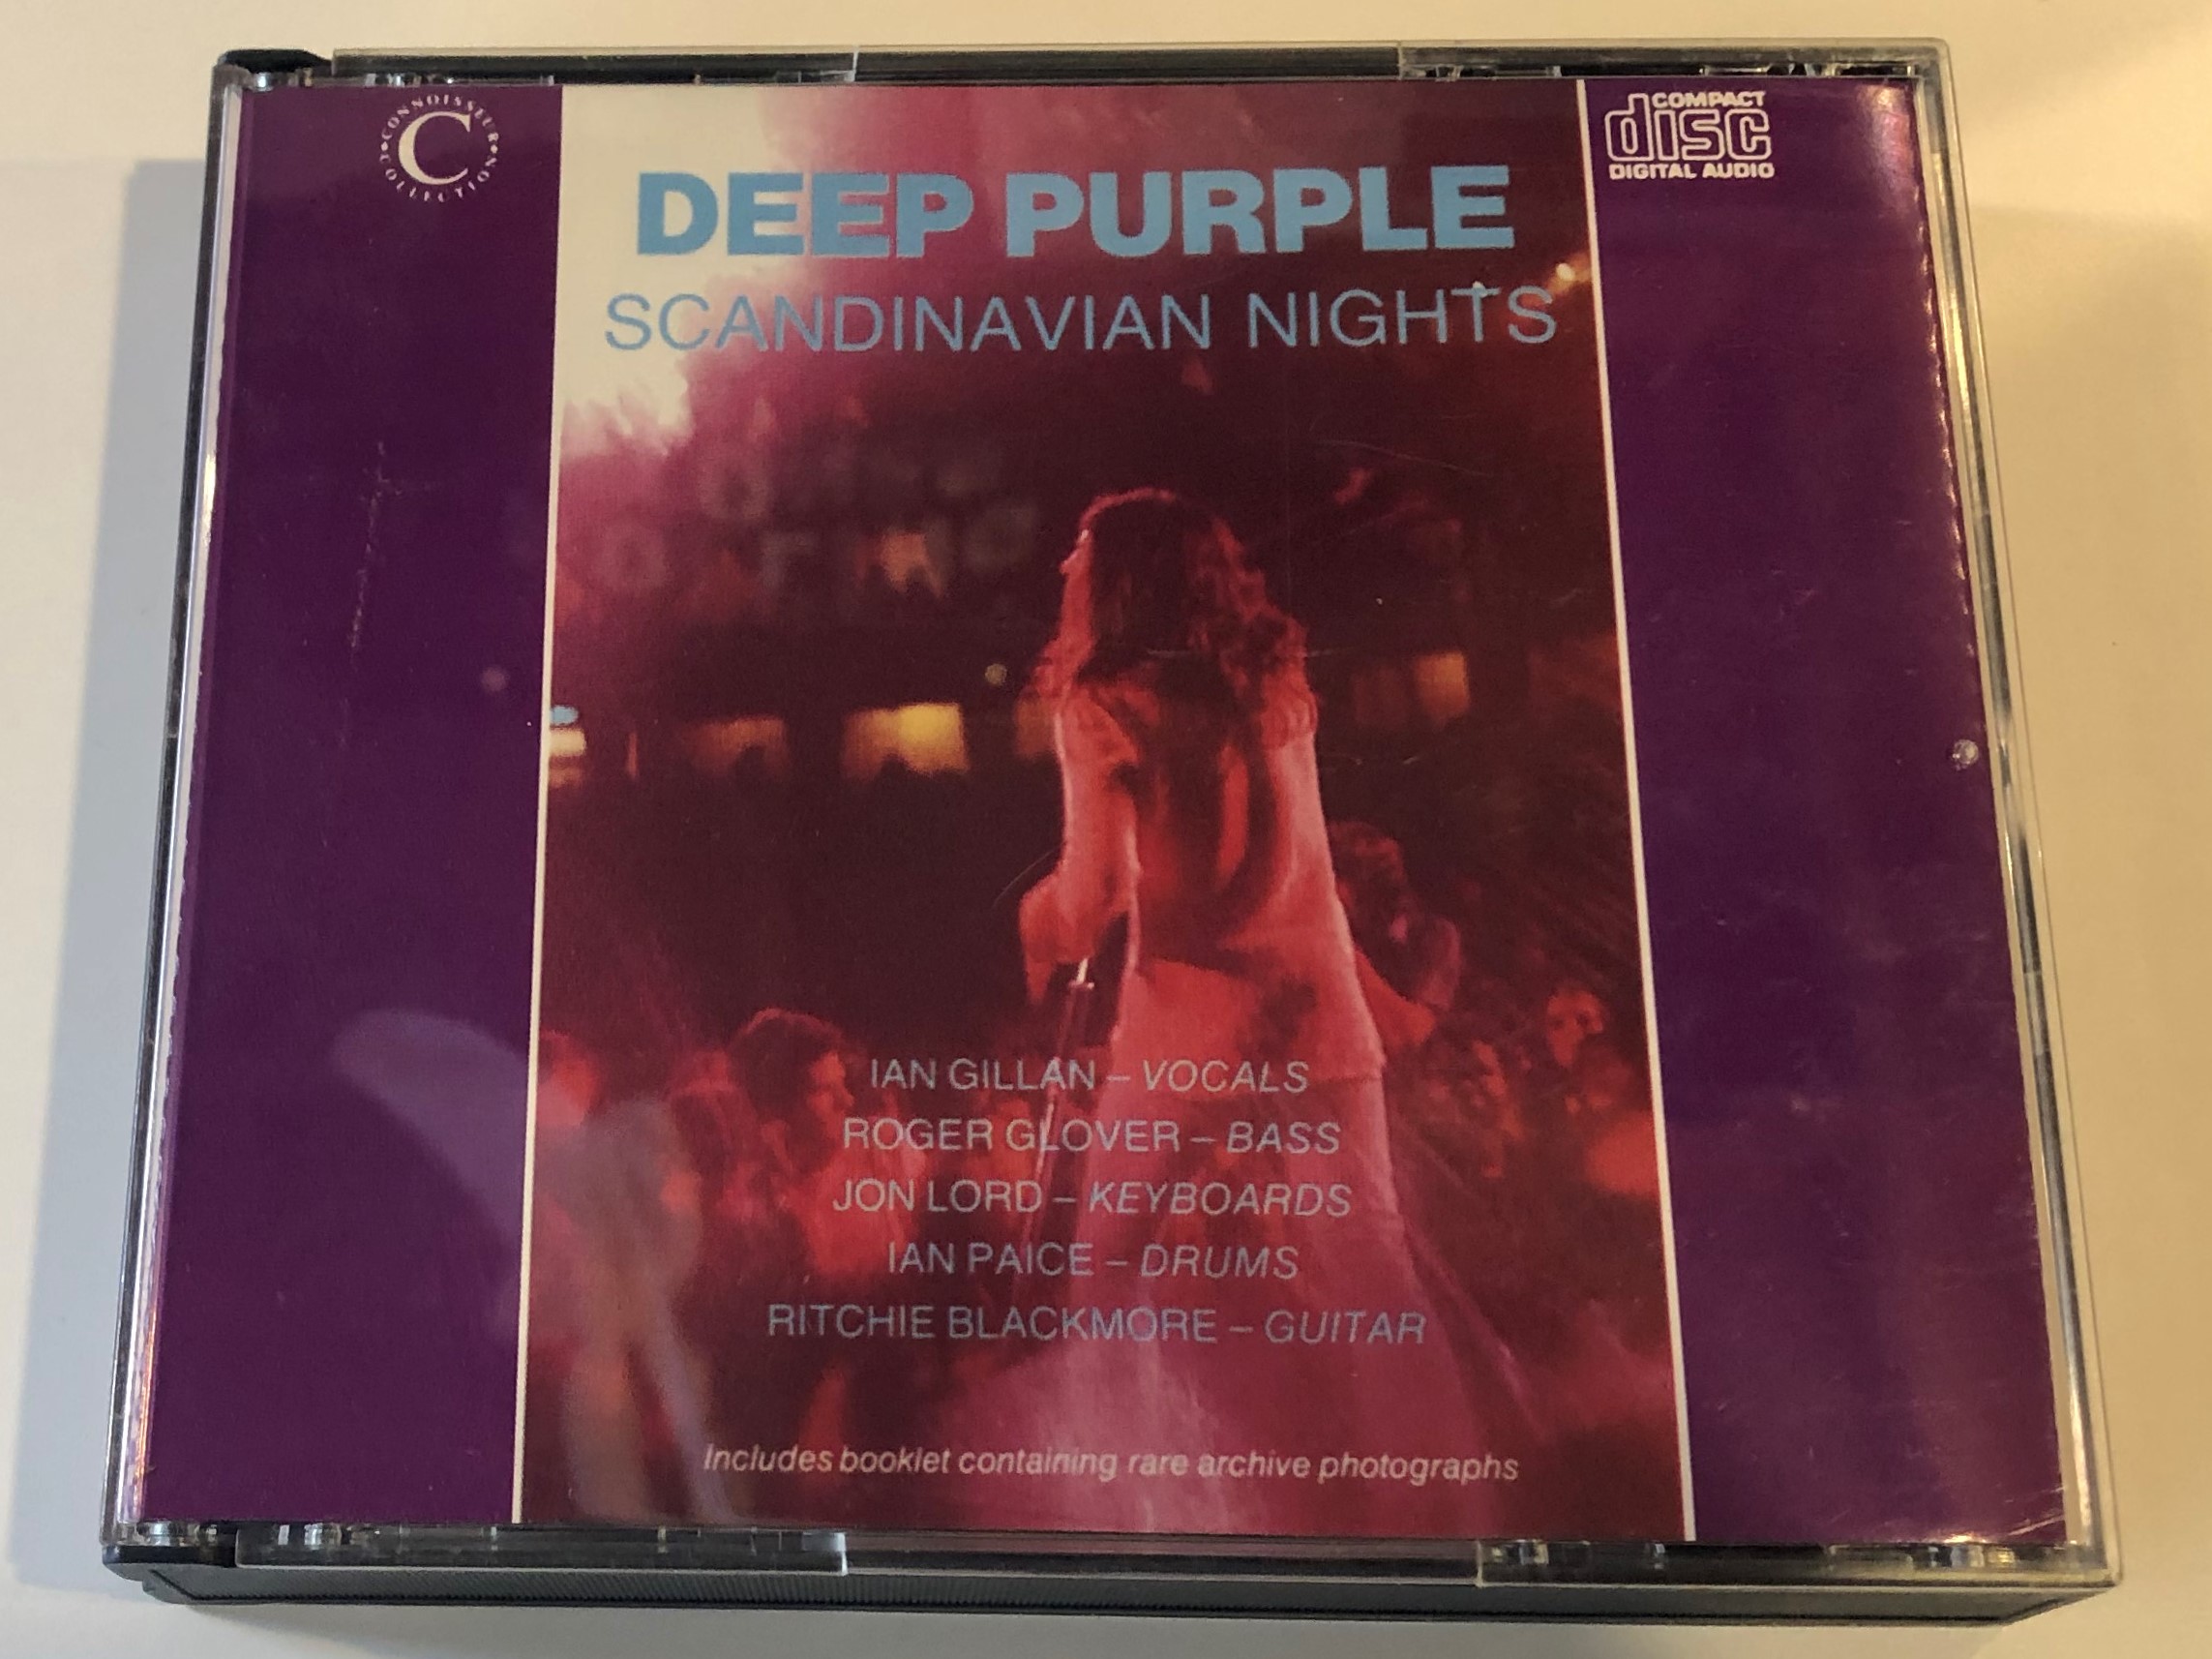 deep-purple-scandinavian-nights-ian-gillan-vocals-roger-glover-bass-jon-lord-keyboards-ian-paice-drums-ritchie-blackmore-guitar-connoisseur-collection-2x-audio-cd-1972-dp-vsop-1-.jpg